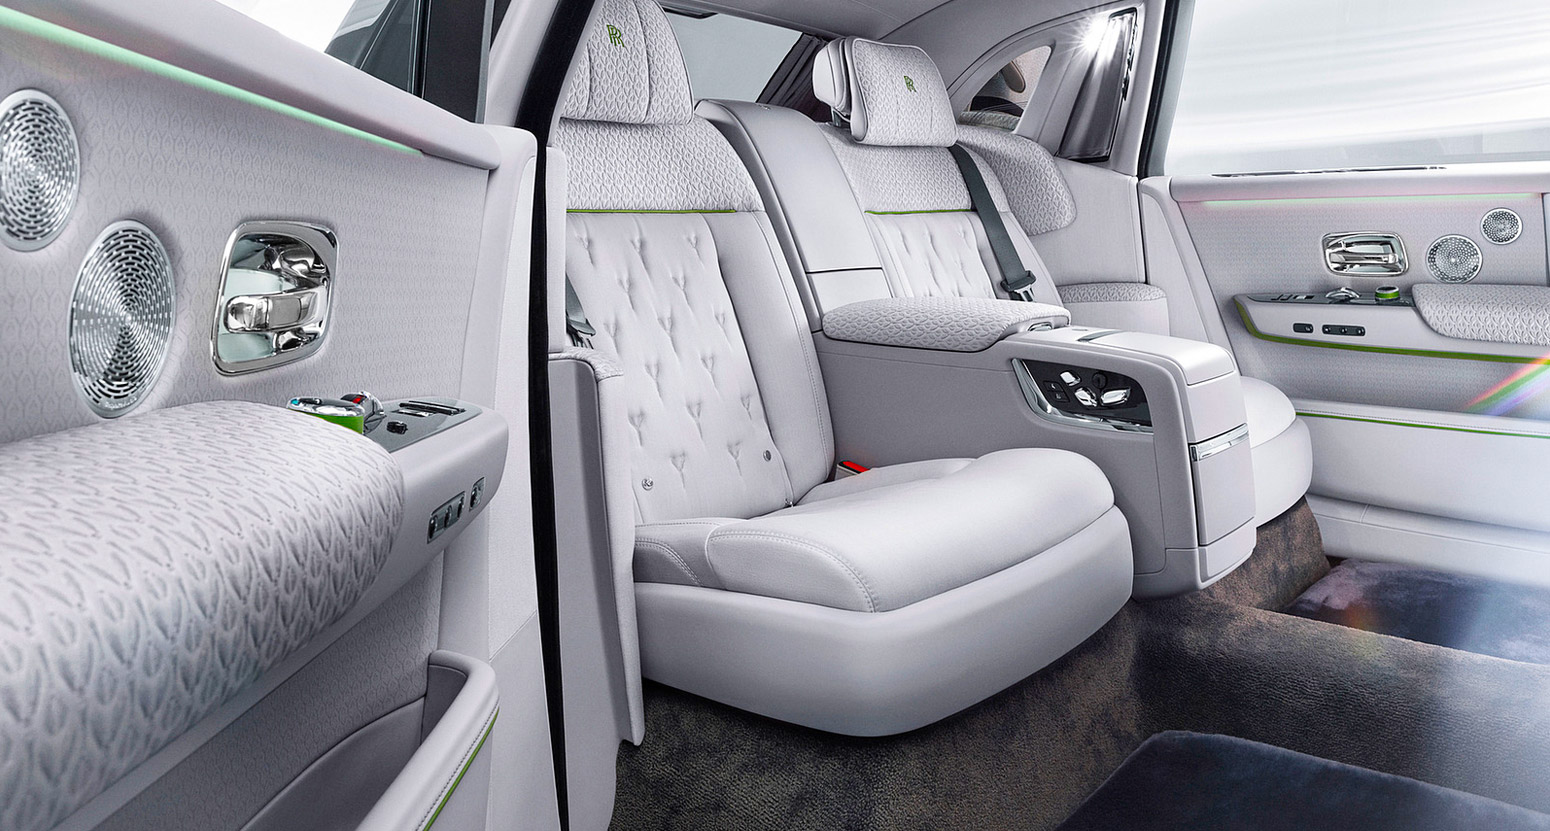 SLC- Starr Luxury Cars Chauffeur Service - Mayfair, Uk, London, Europe, Dubai and U.S.A